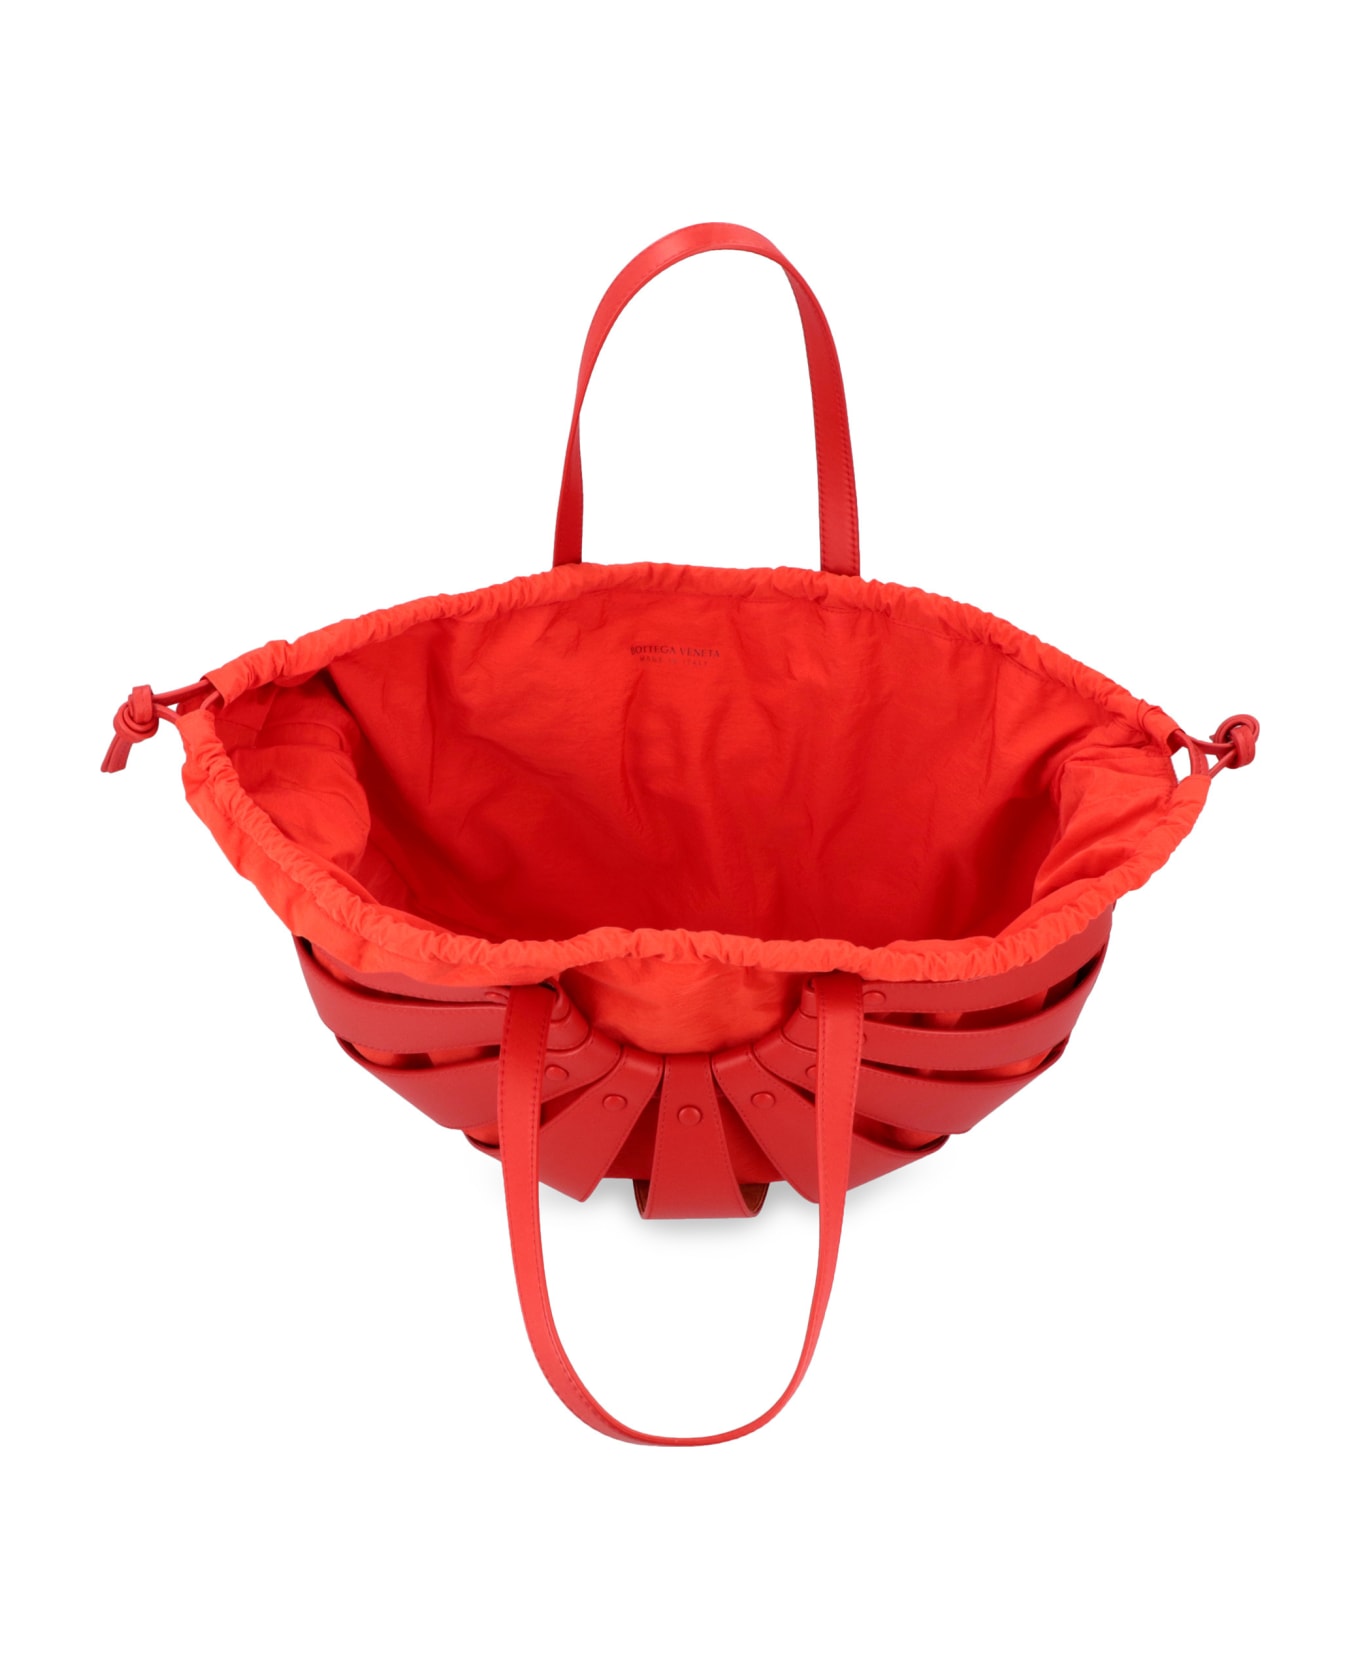 Bottega Veneta Shell Shoulder Bag - red トートバッグ